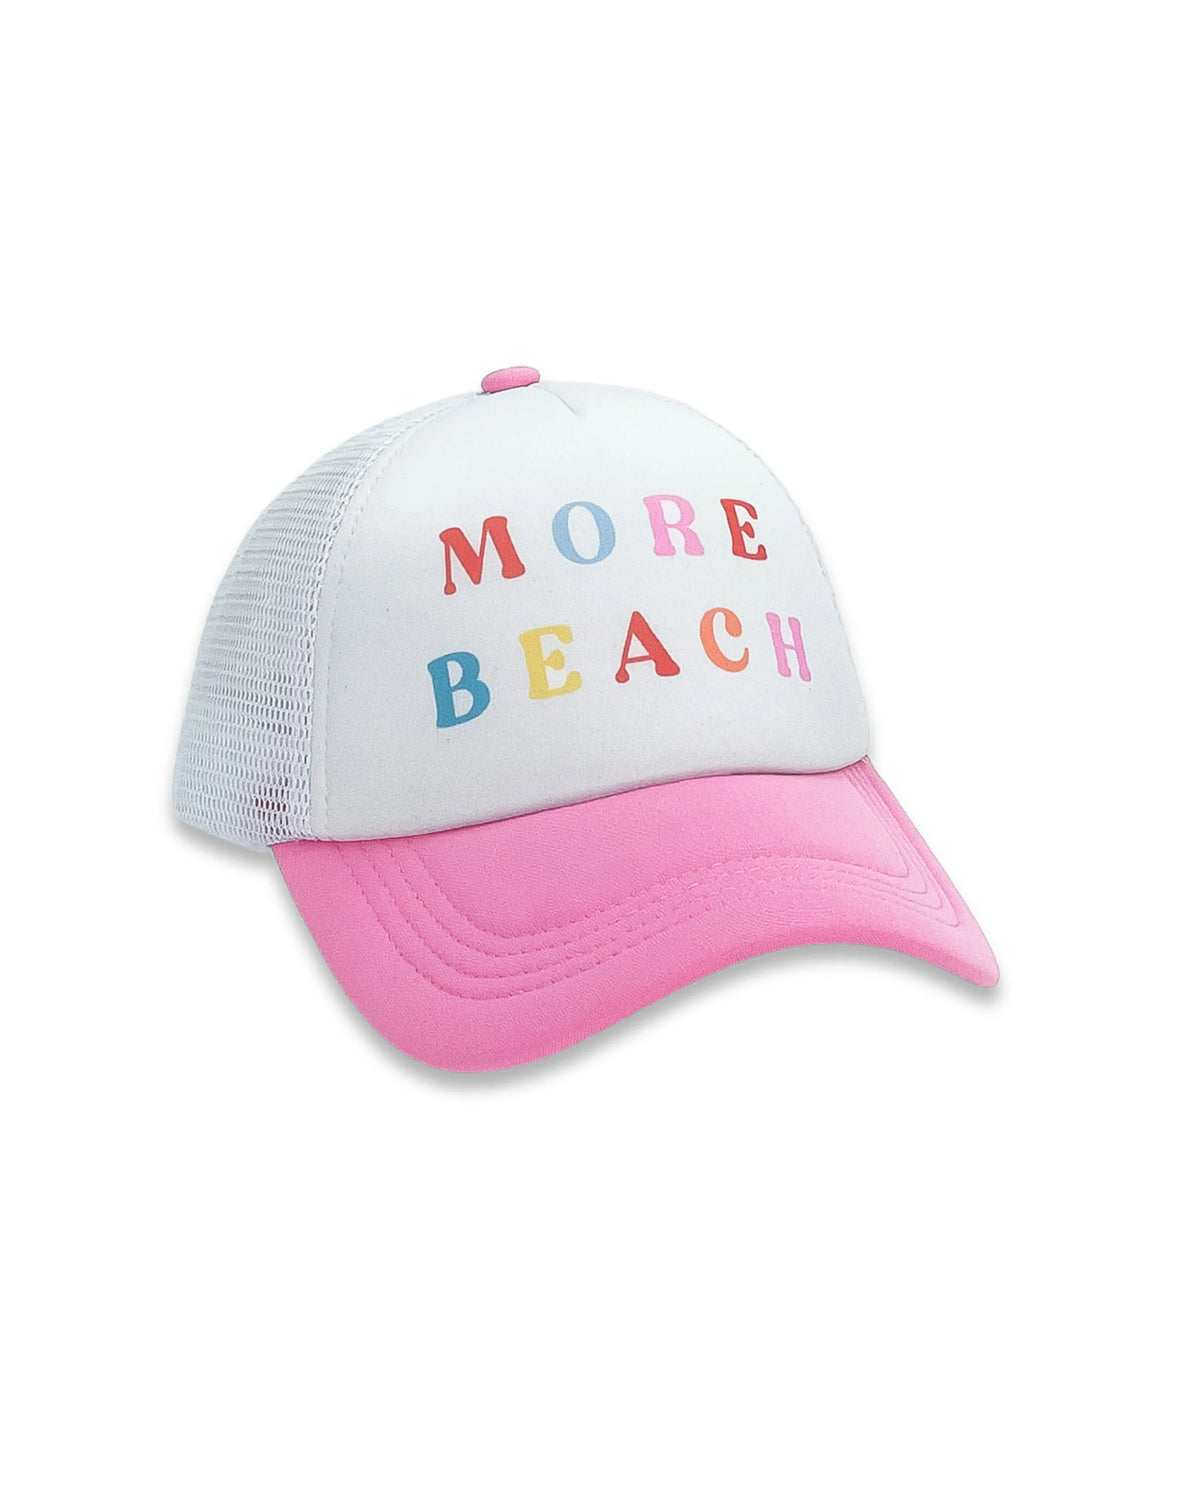 More Beach Trucker Hat - JoeyRae